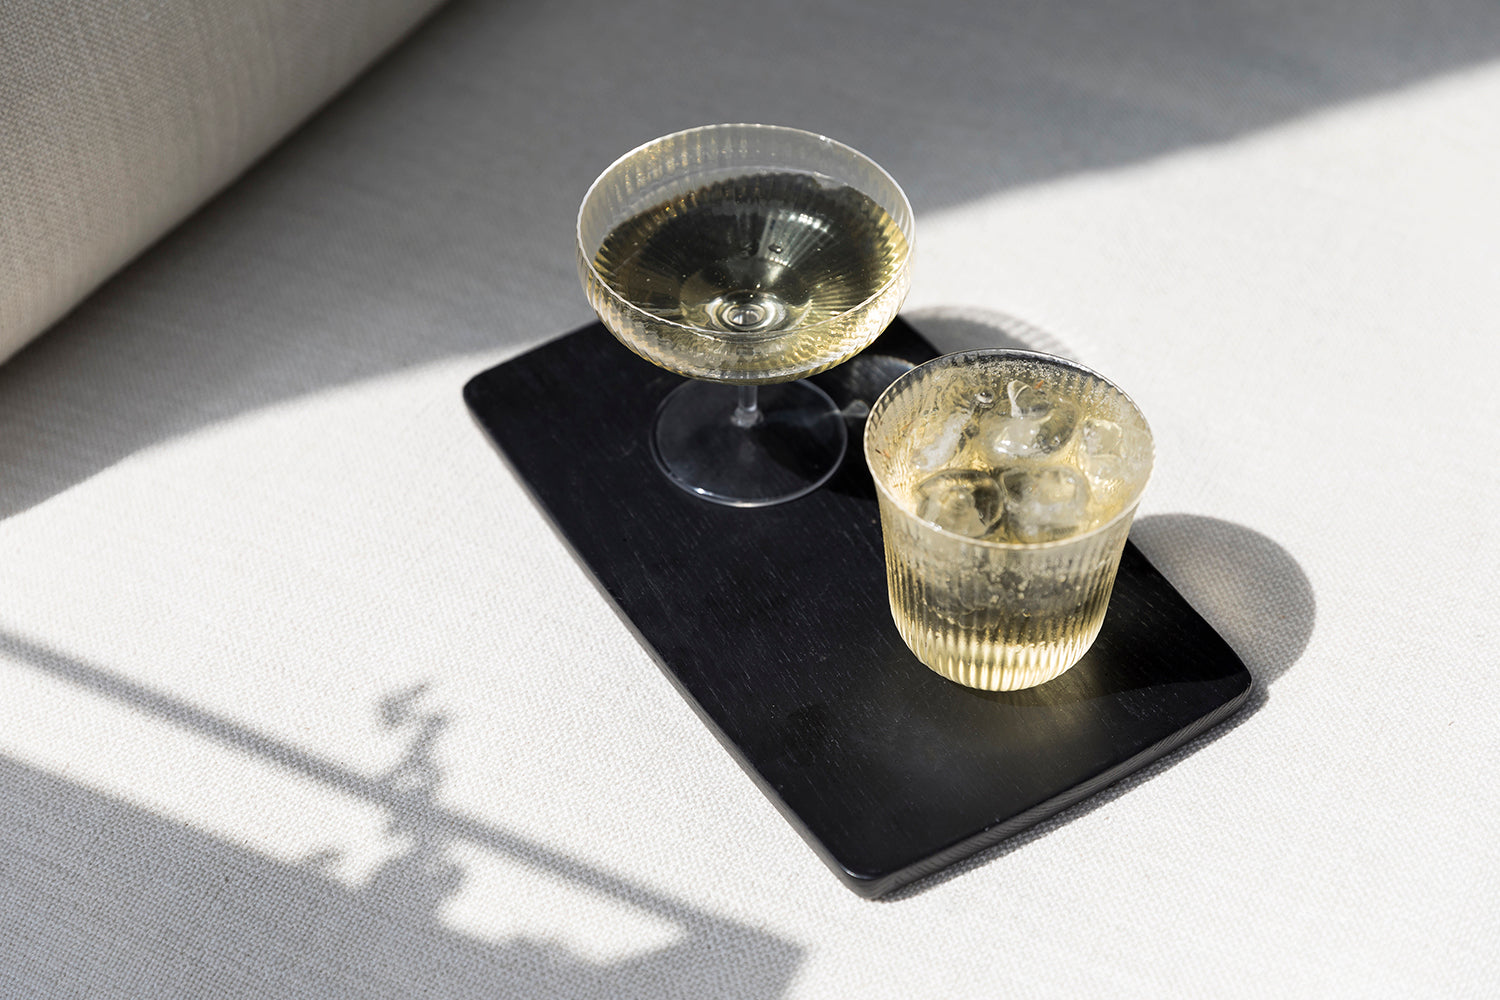 Inku Champagne Coupe with matching glass by Serax.